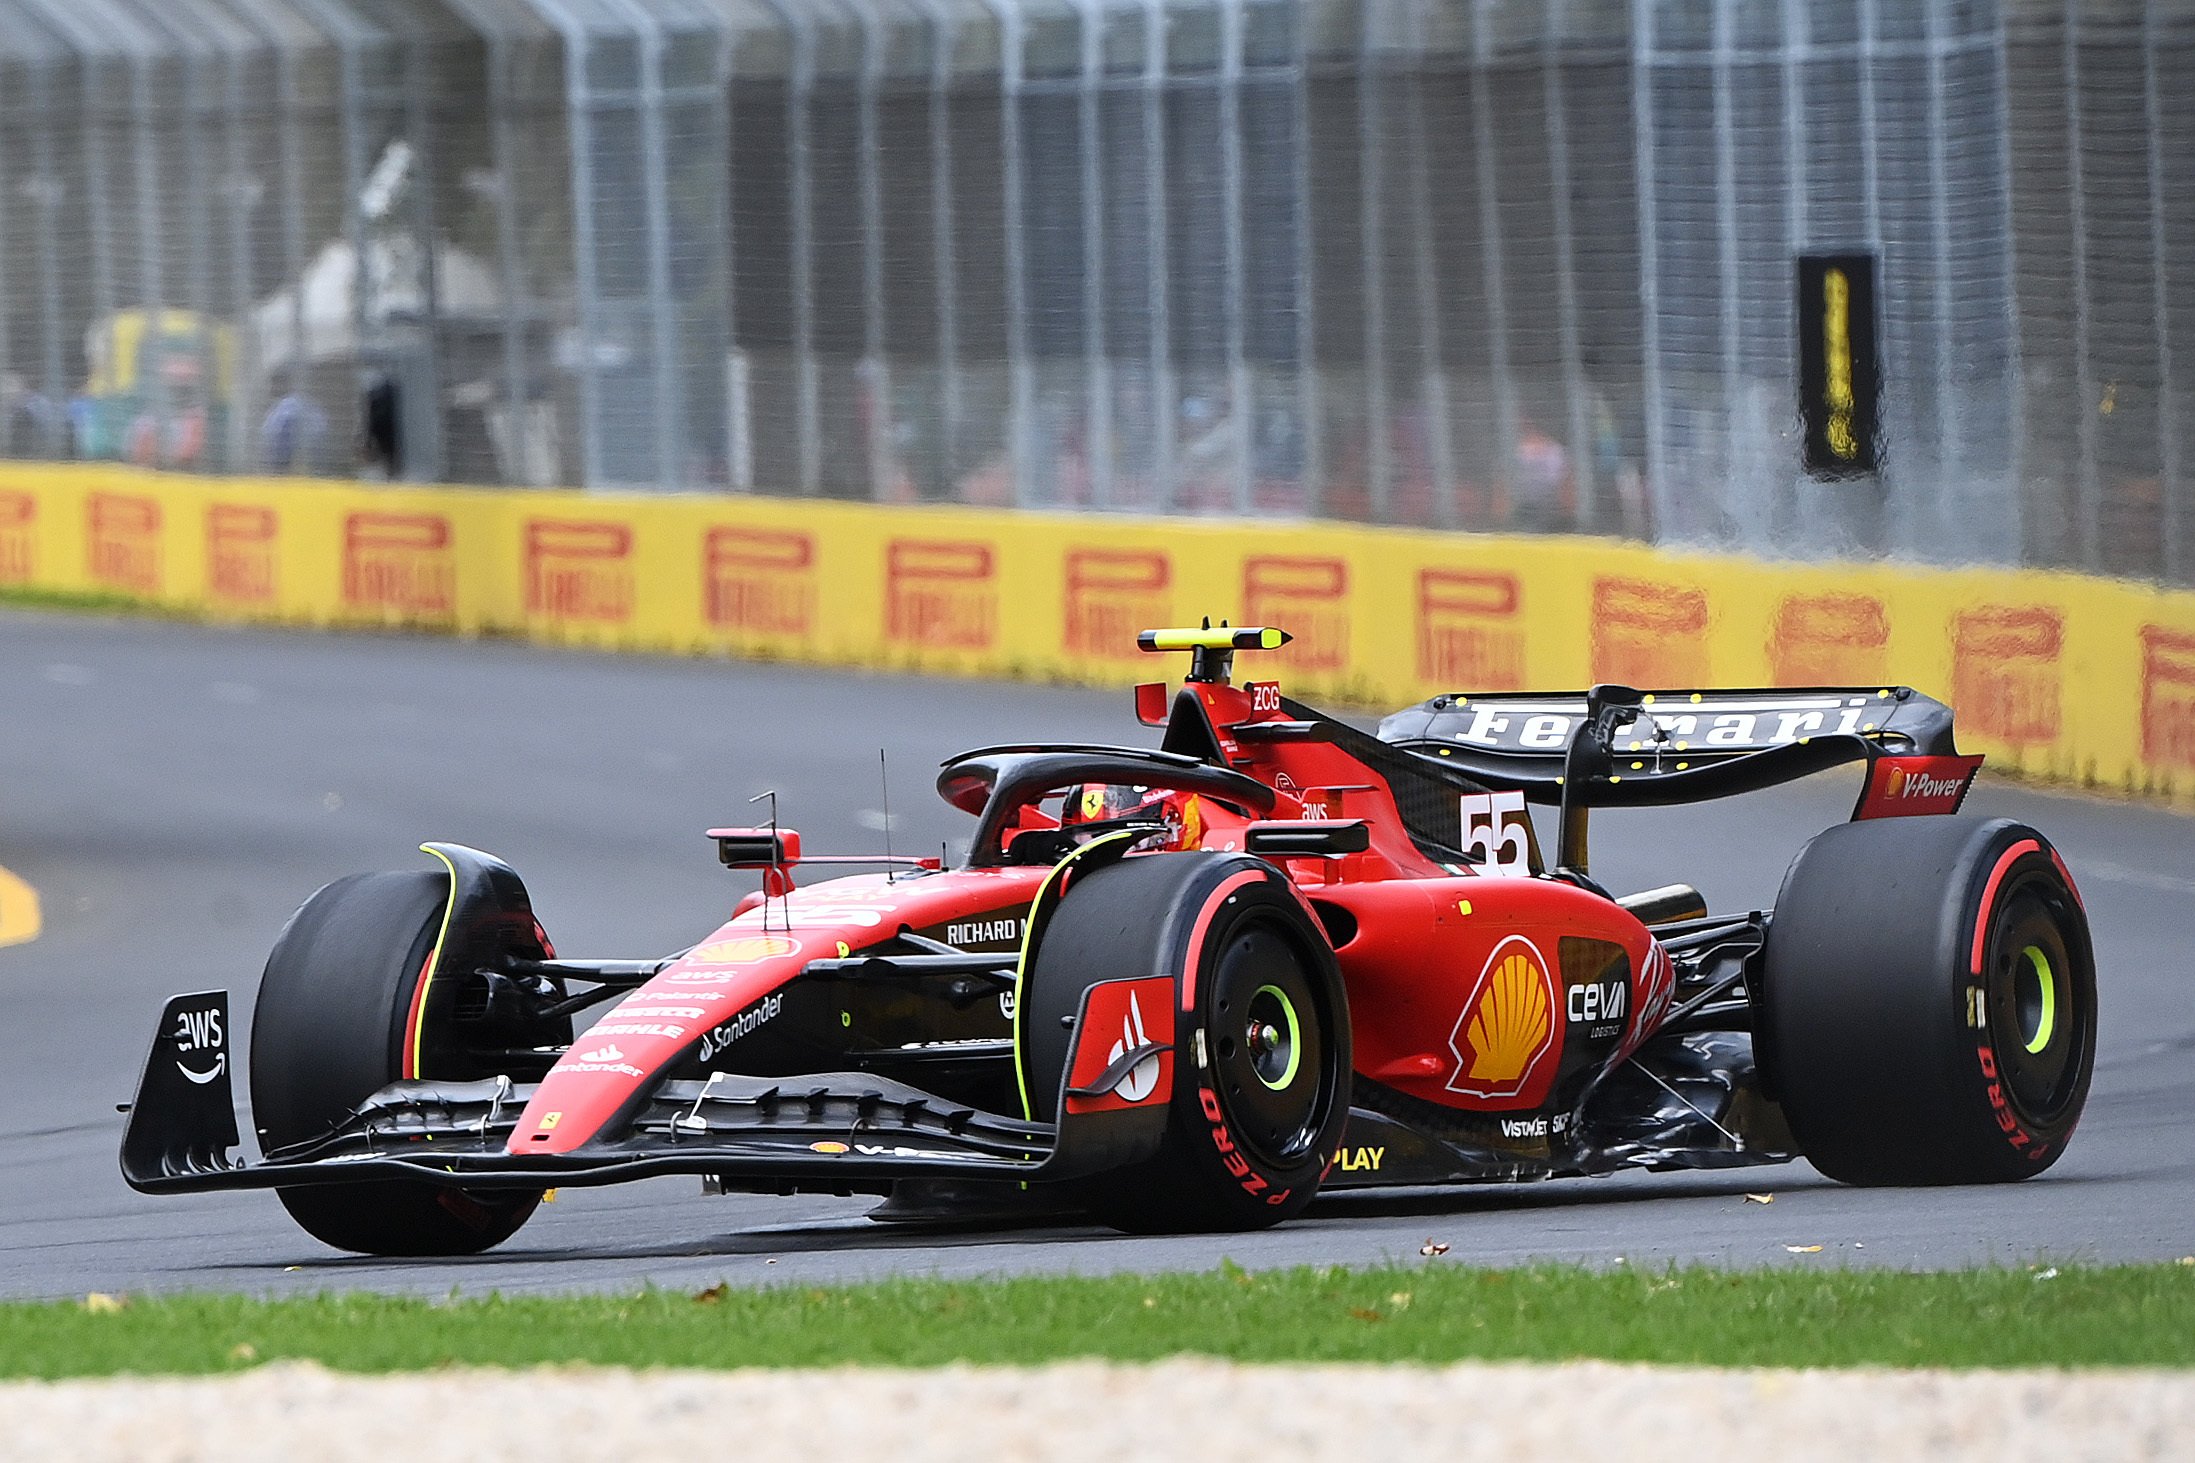 Ferrari unveils new sidepod design at F1 Spanish Grand Prix